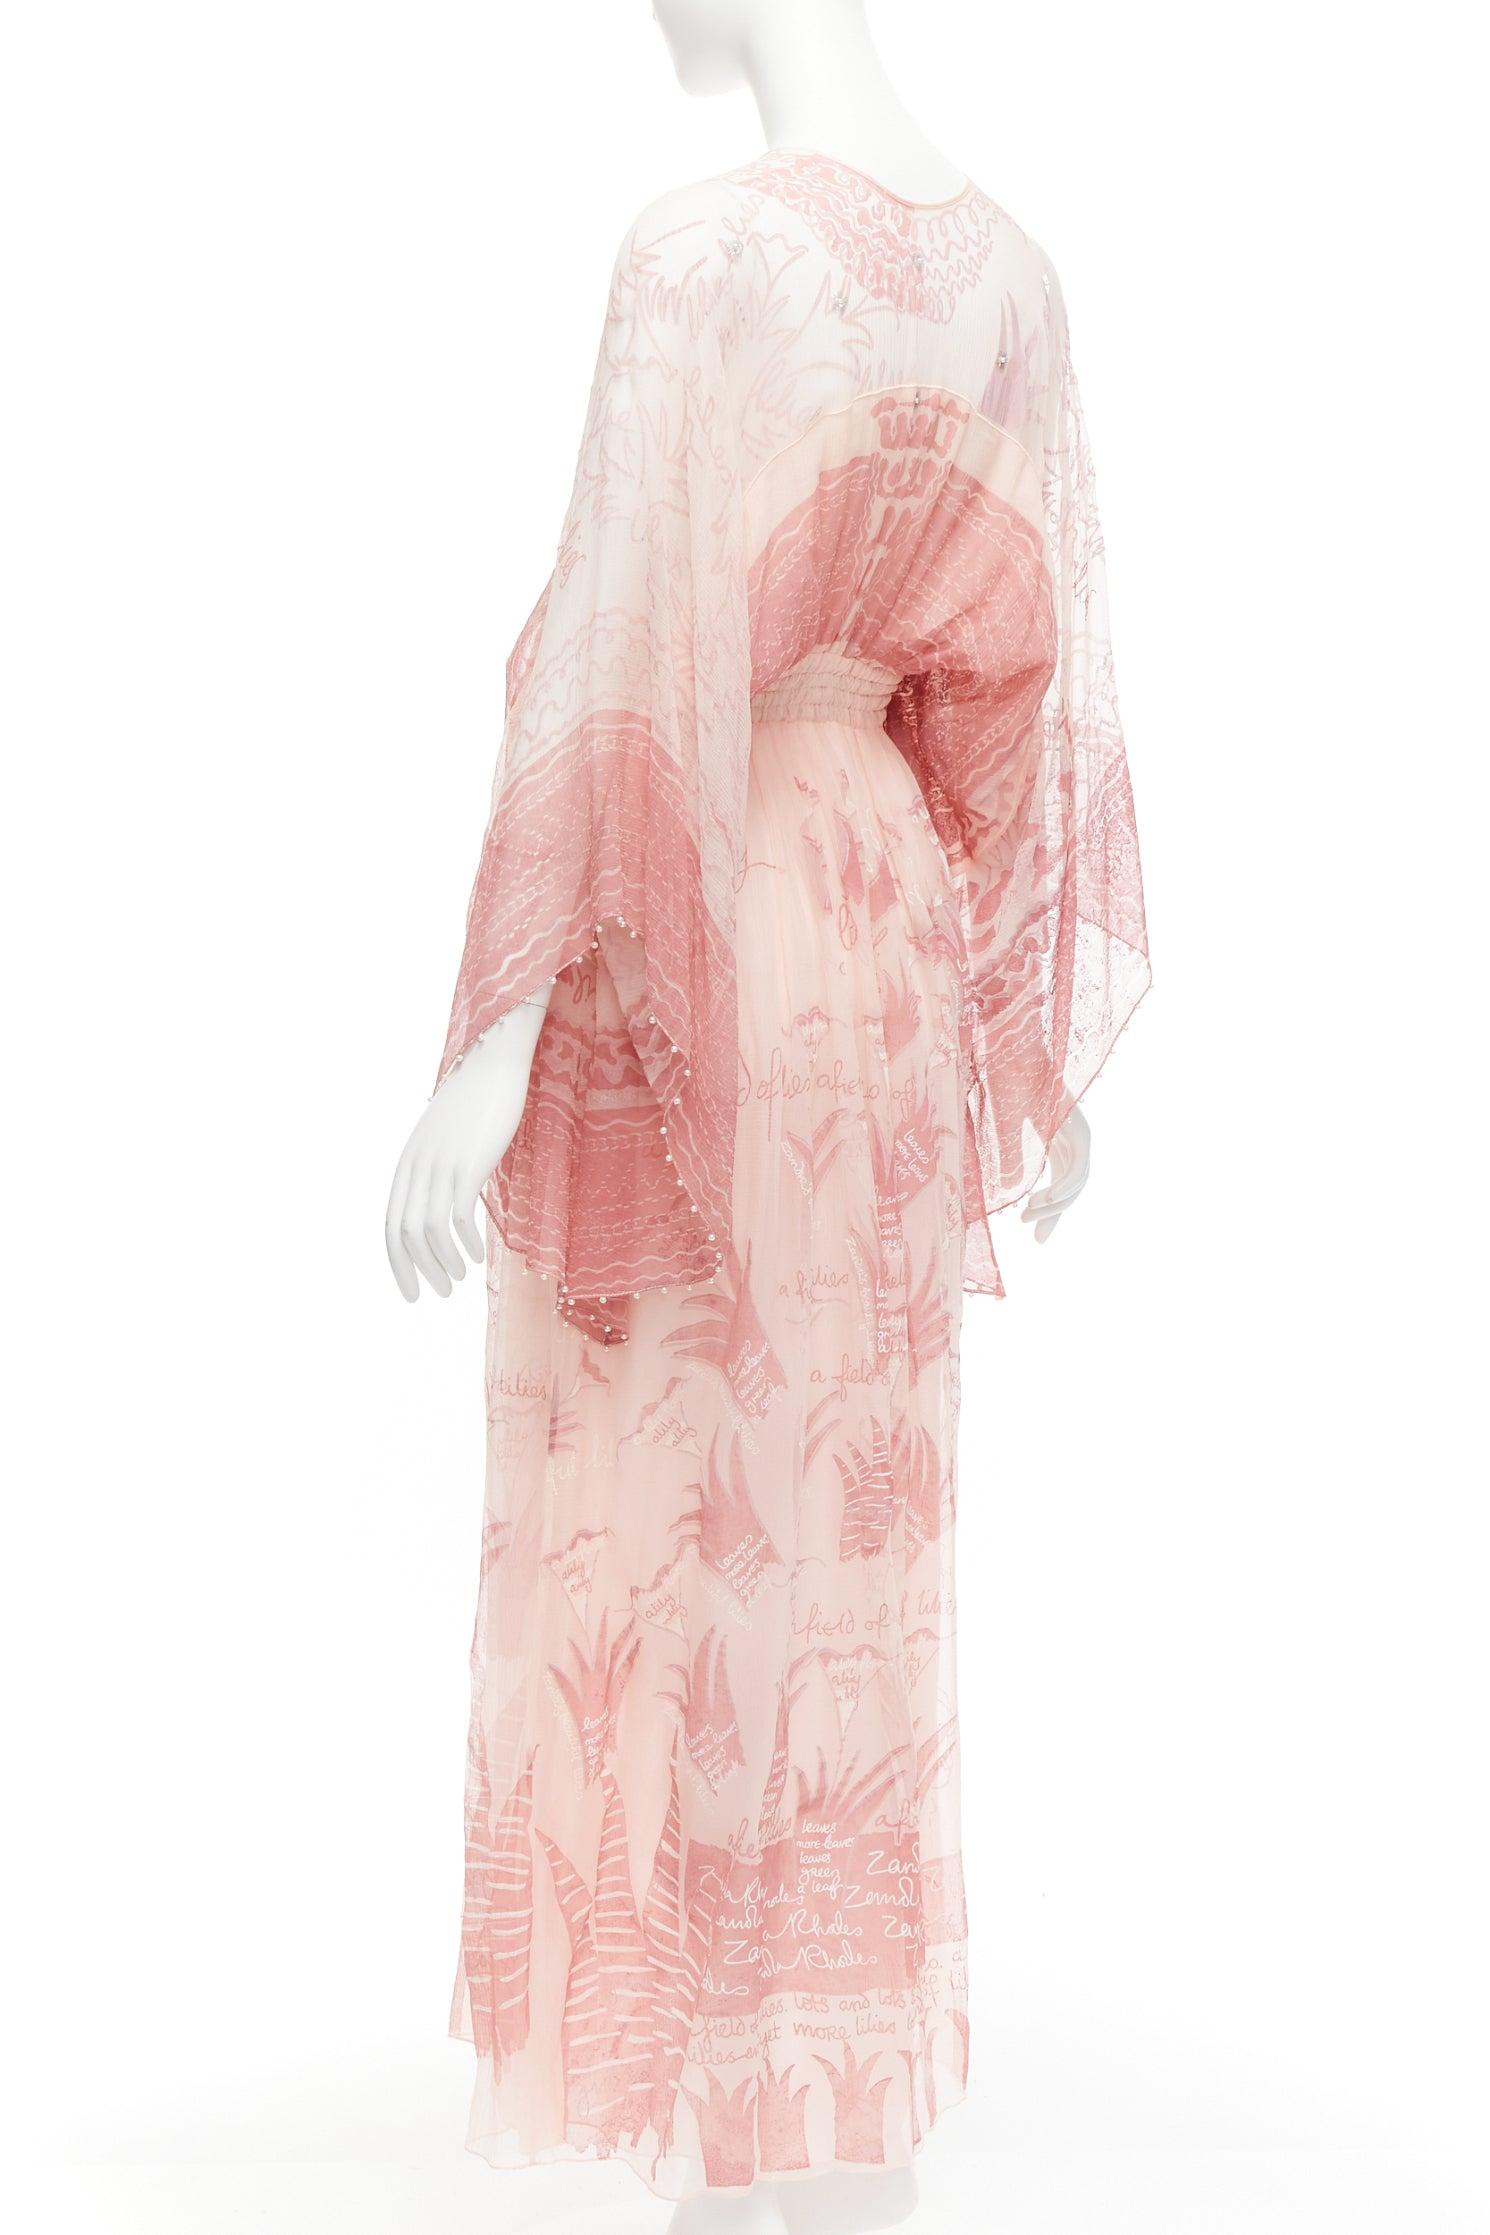 SANDRA RHODE 100% silk pink chiffon bead embellished sundress S For Sale 1